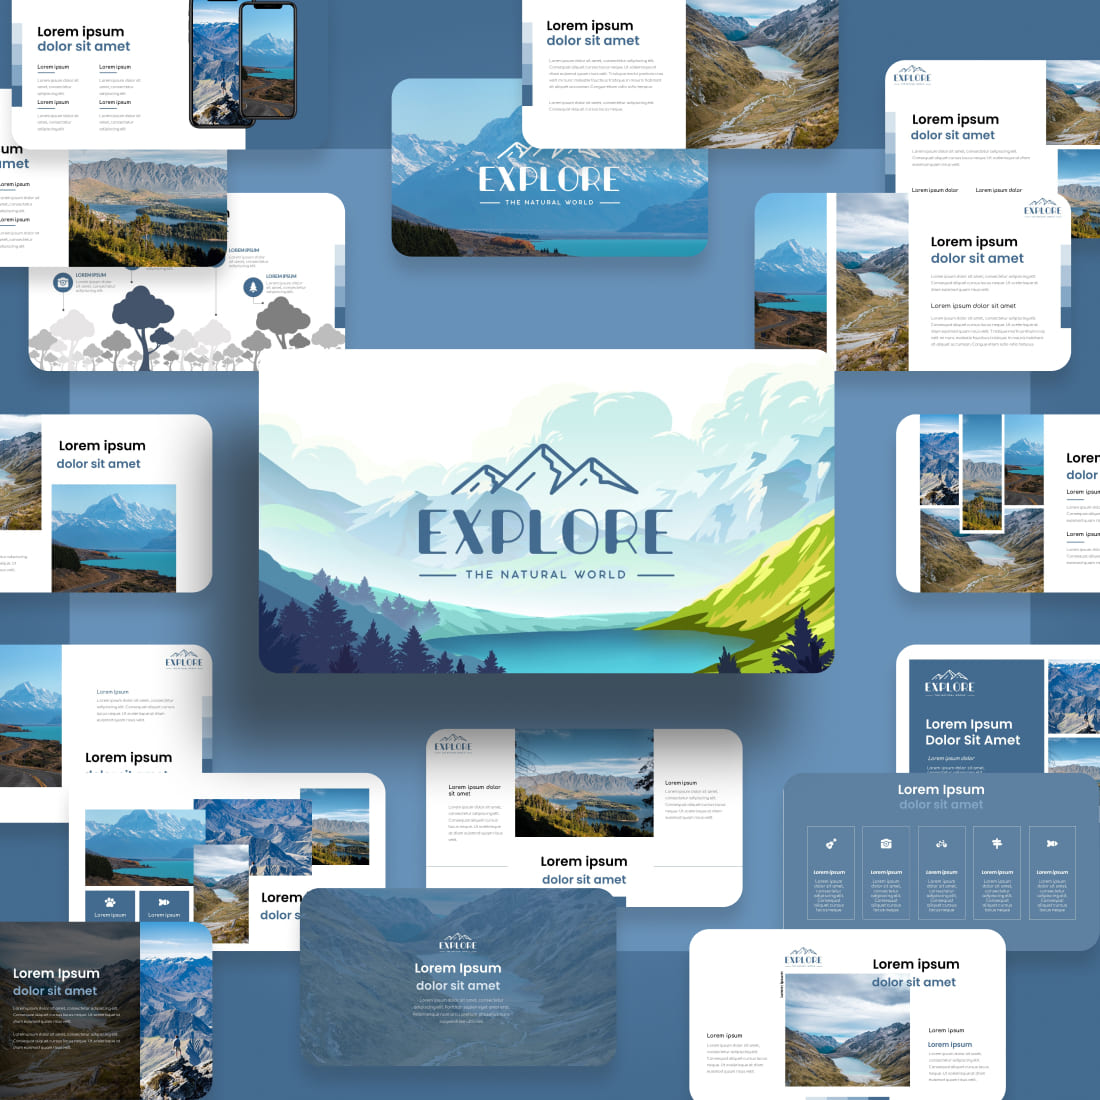 Explore Travel Presentation: 50 Slides PPTX, KEY, Google Slides cover image.